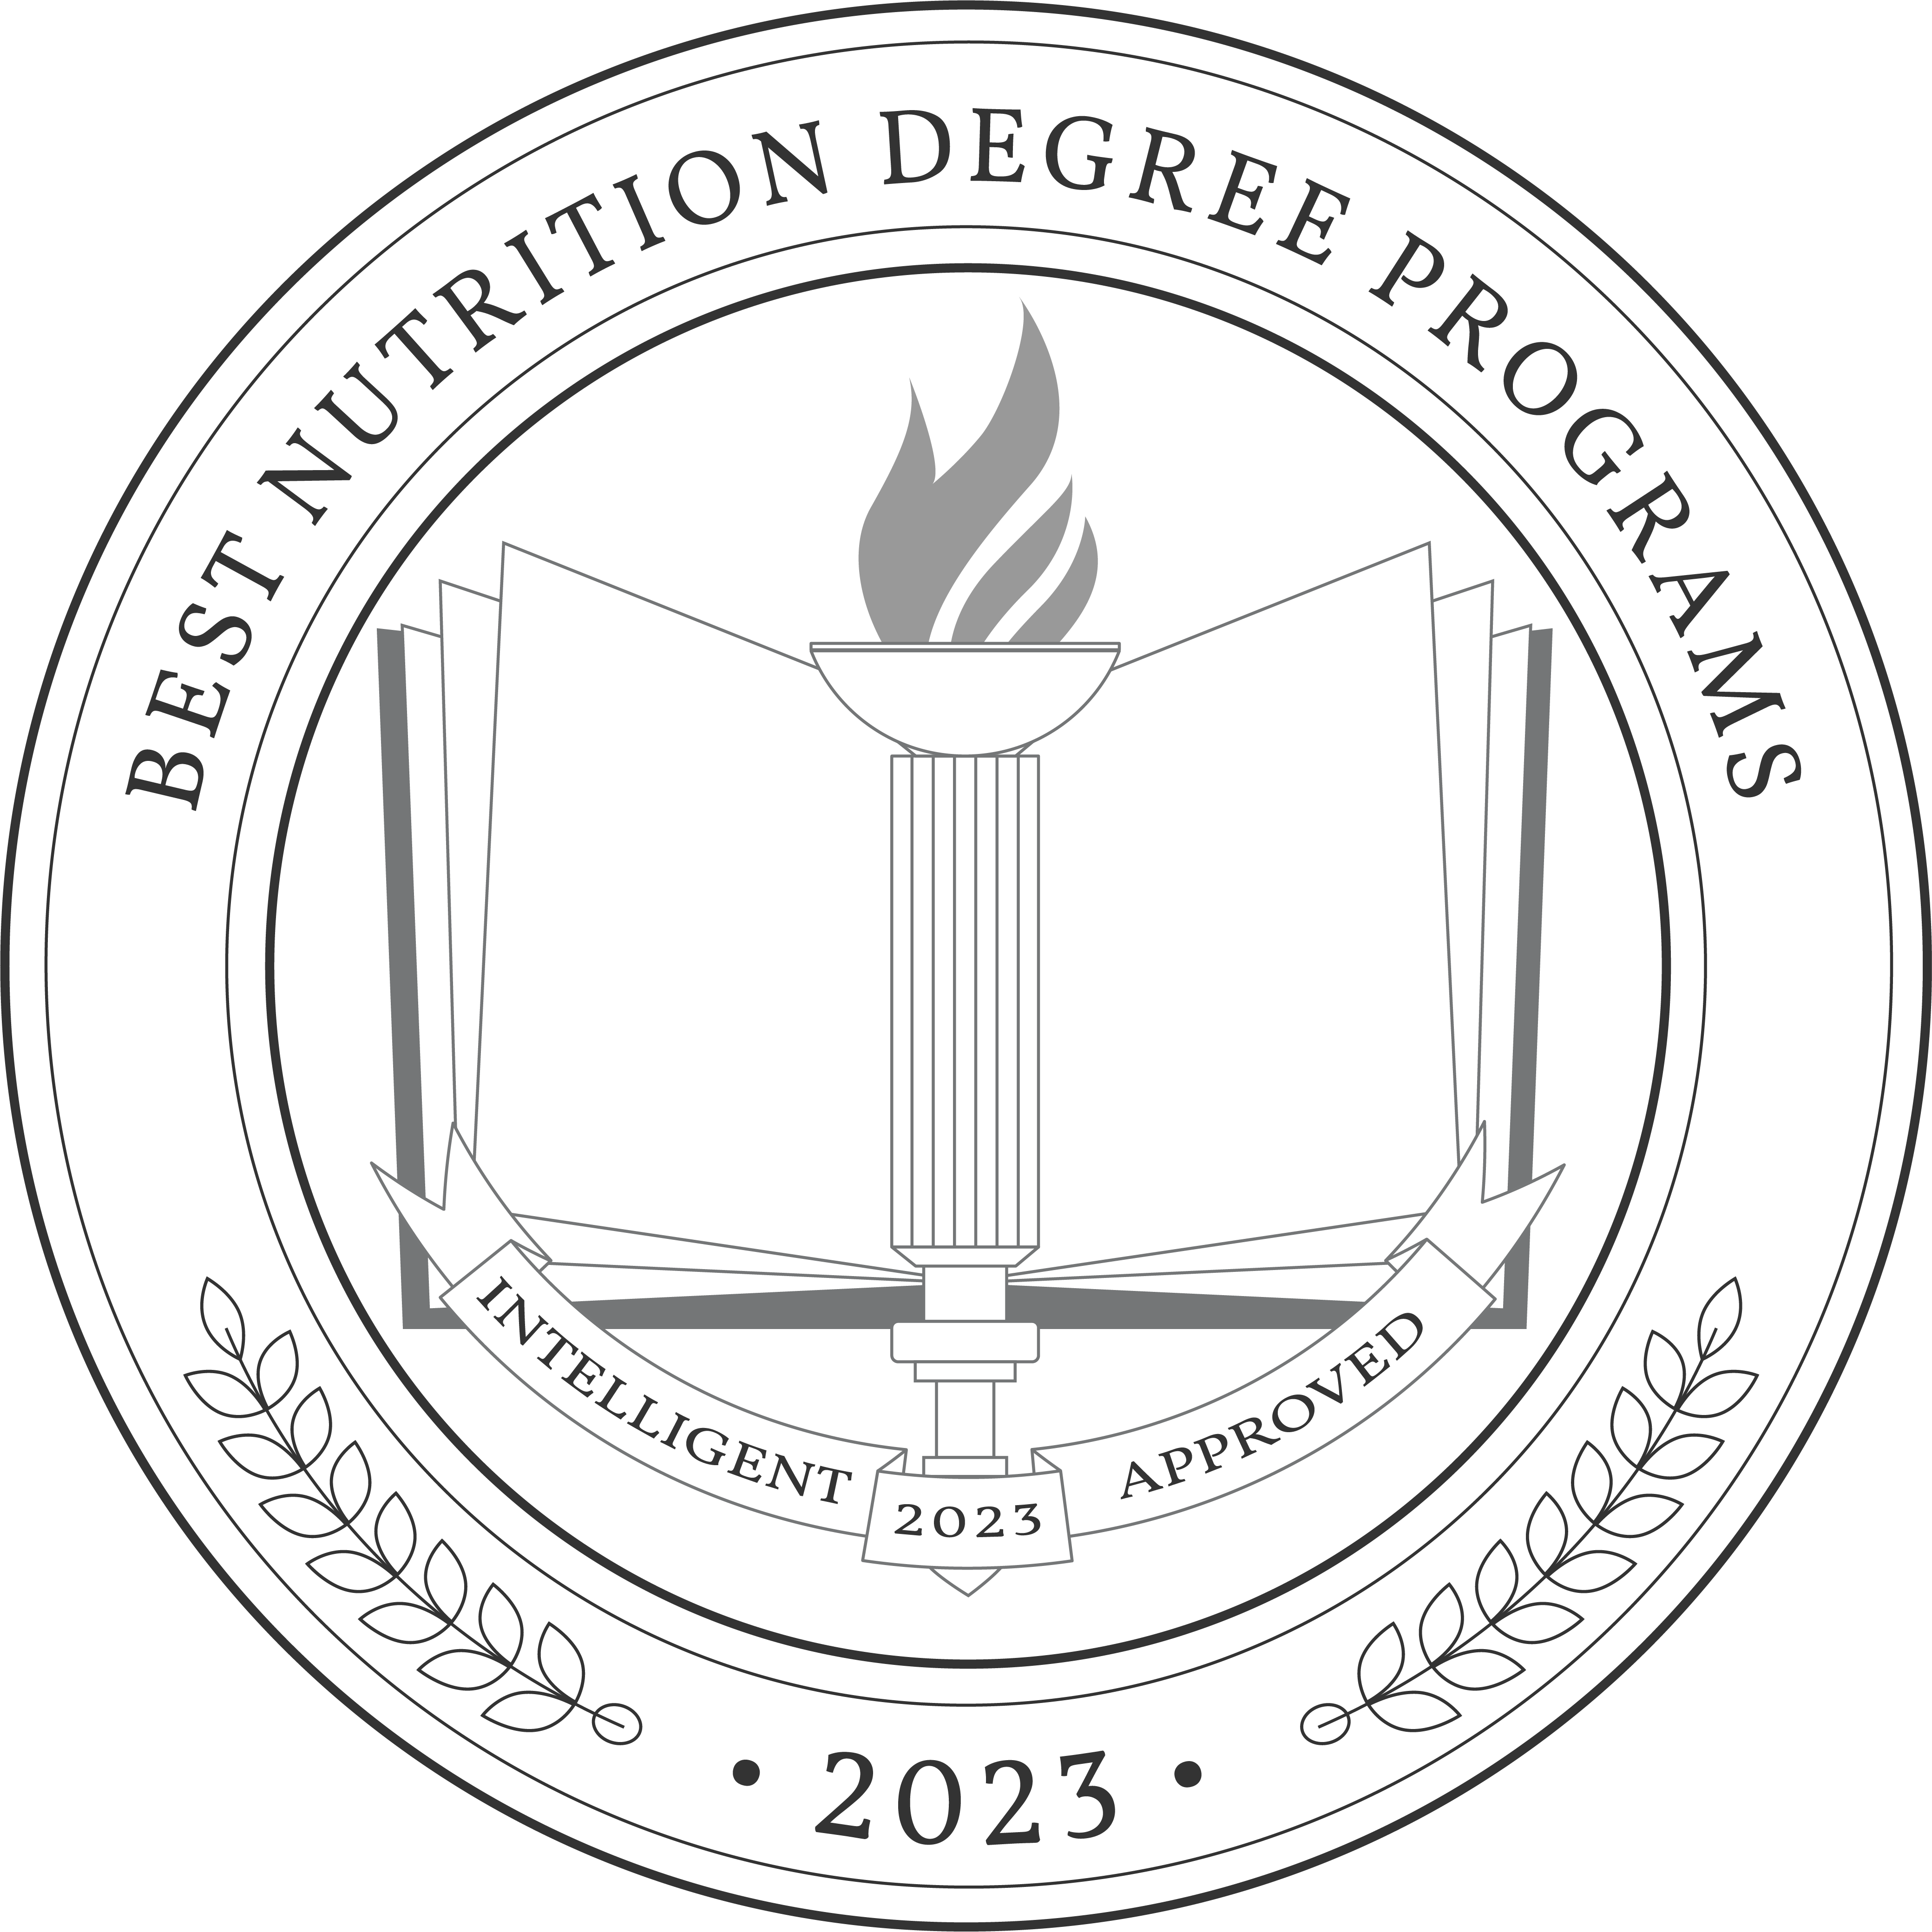 Best Nutrition Degree Programs 2023